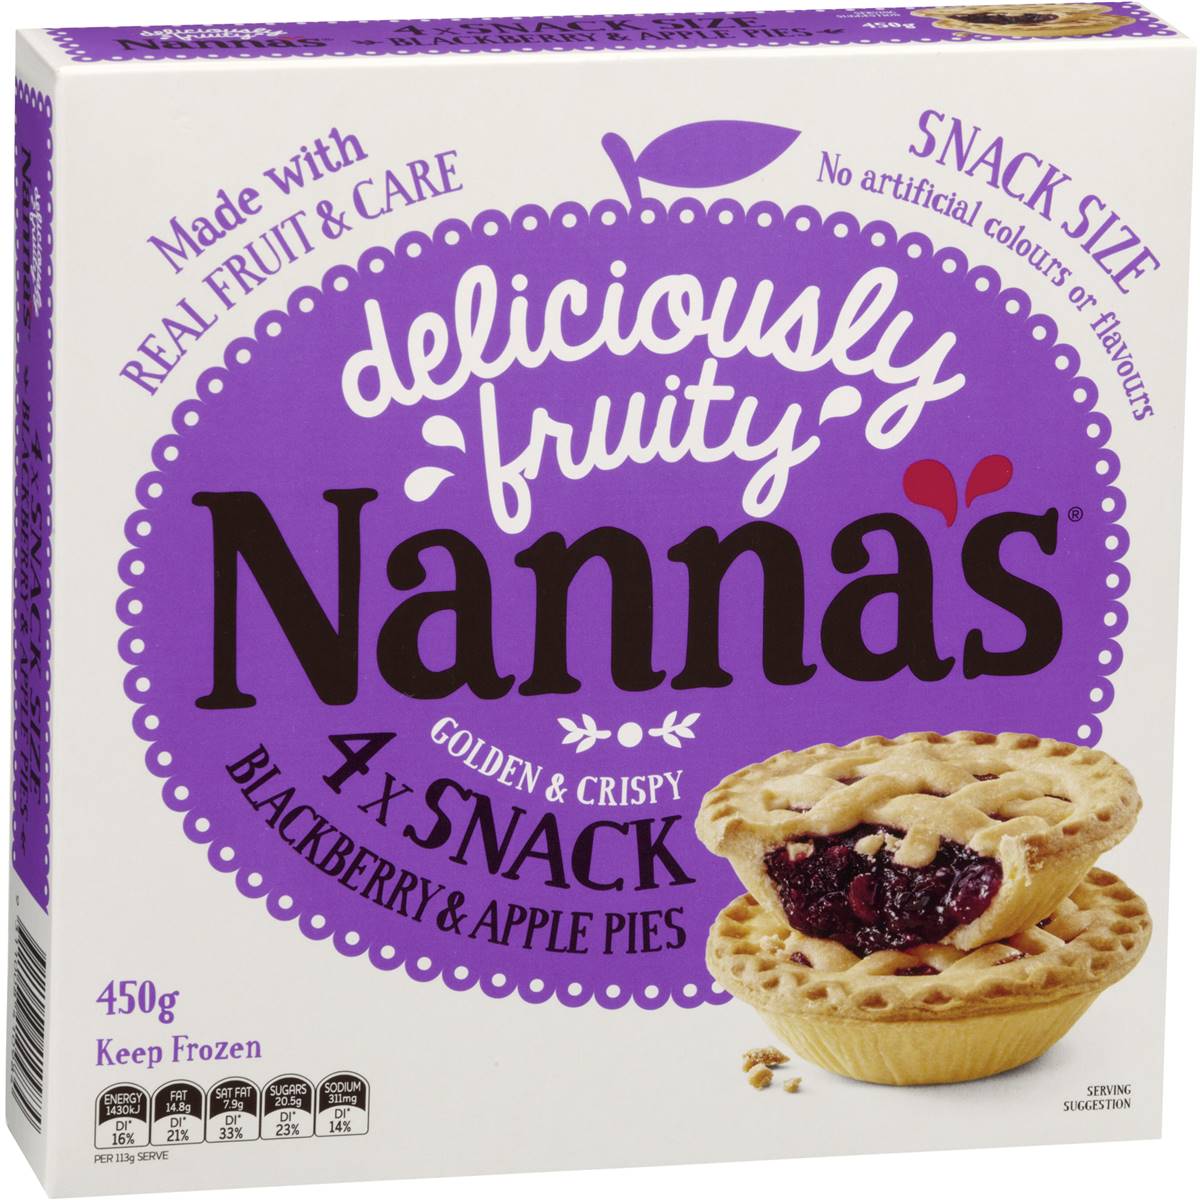 Nannas Snack Blackberry & Apple Pies 4pk 450g